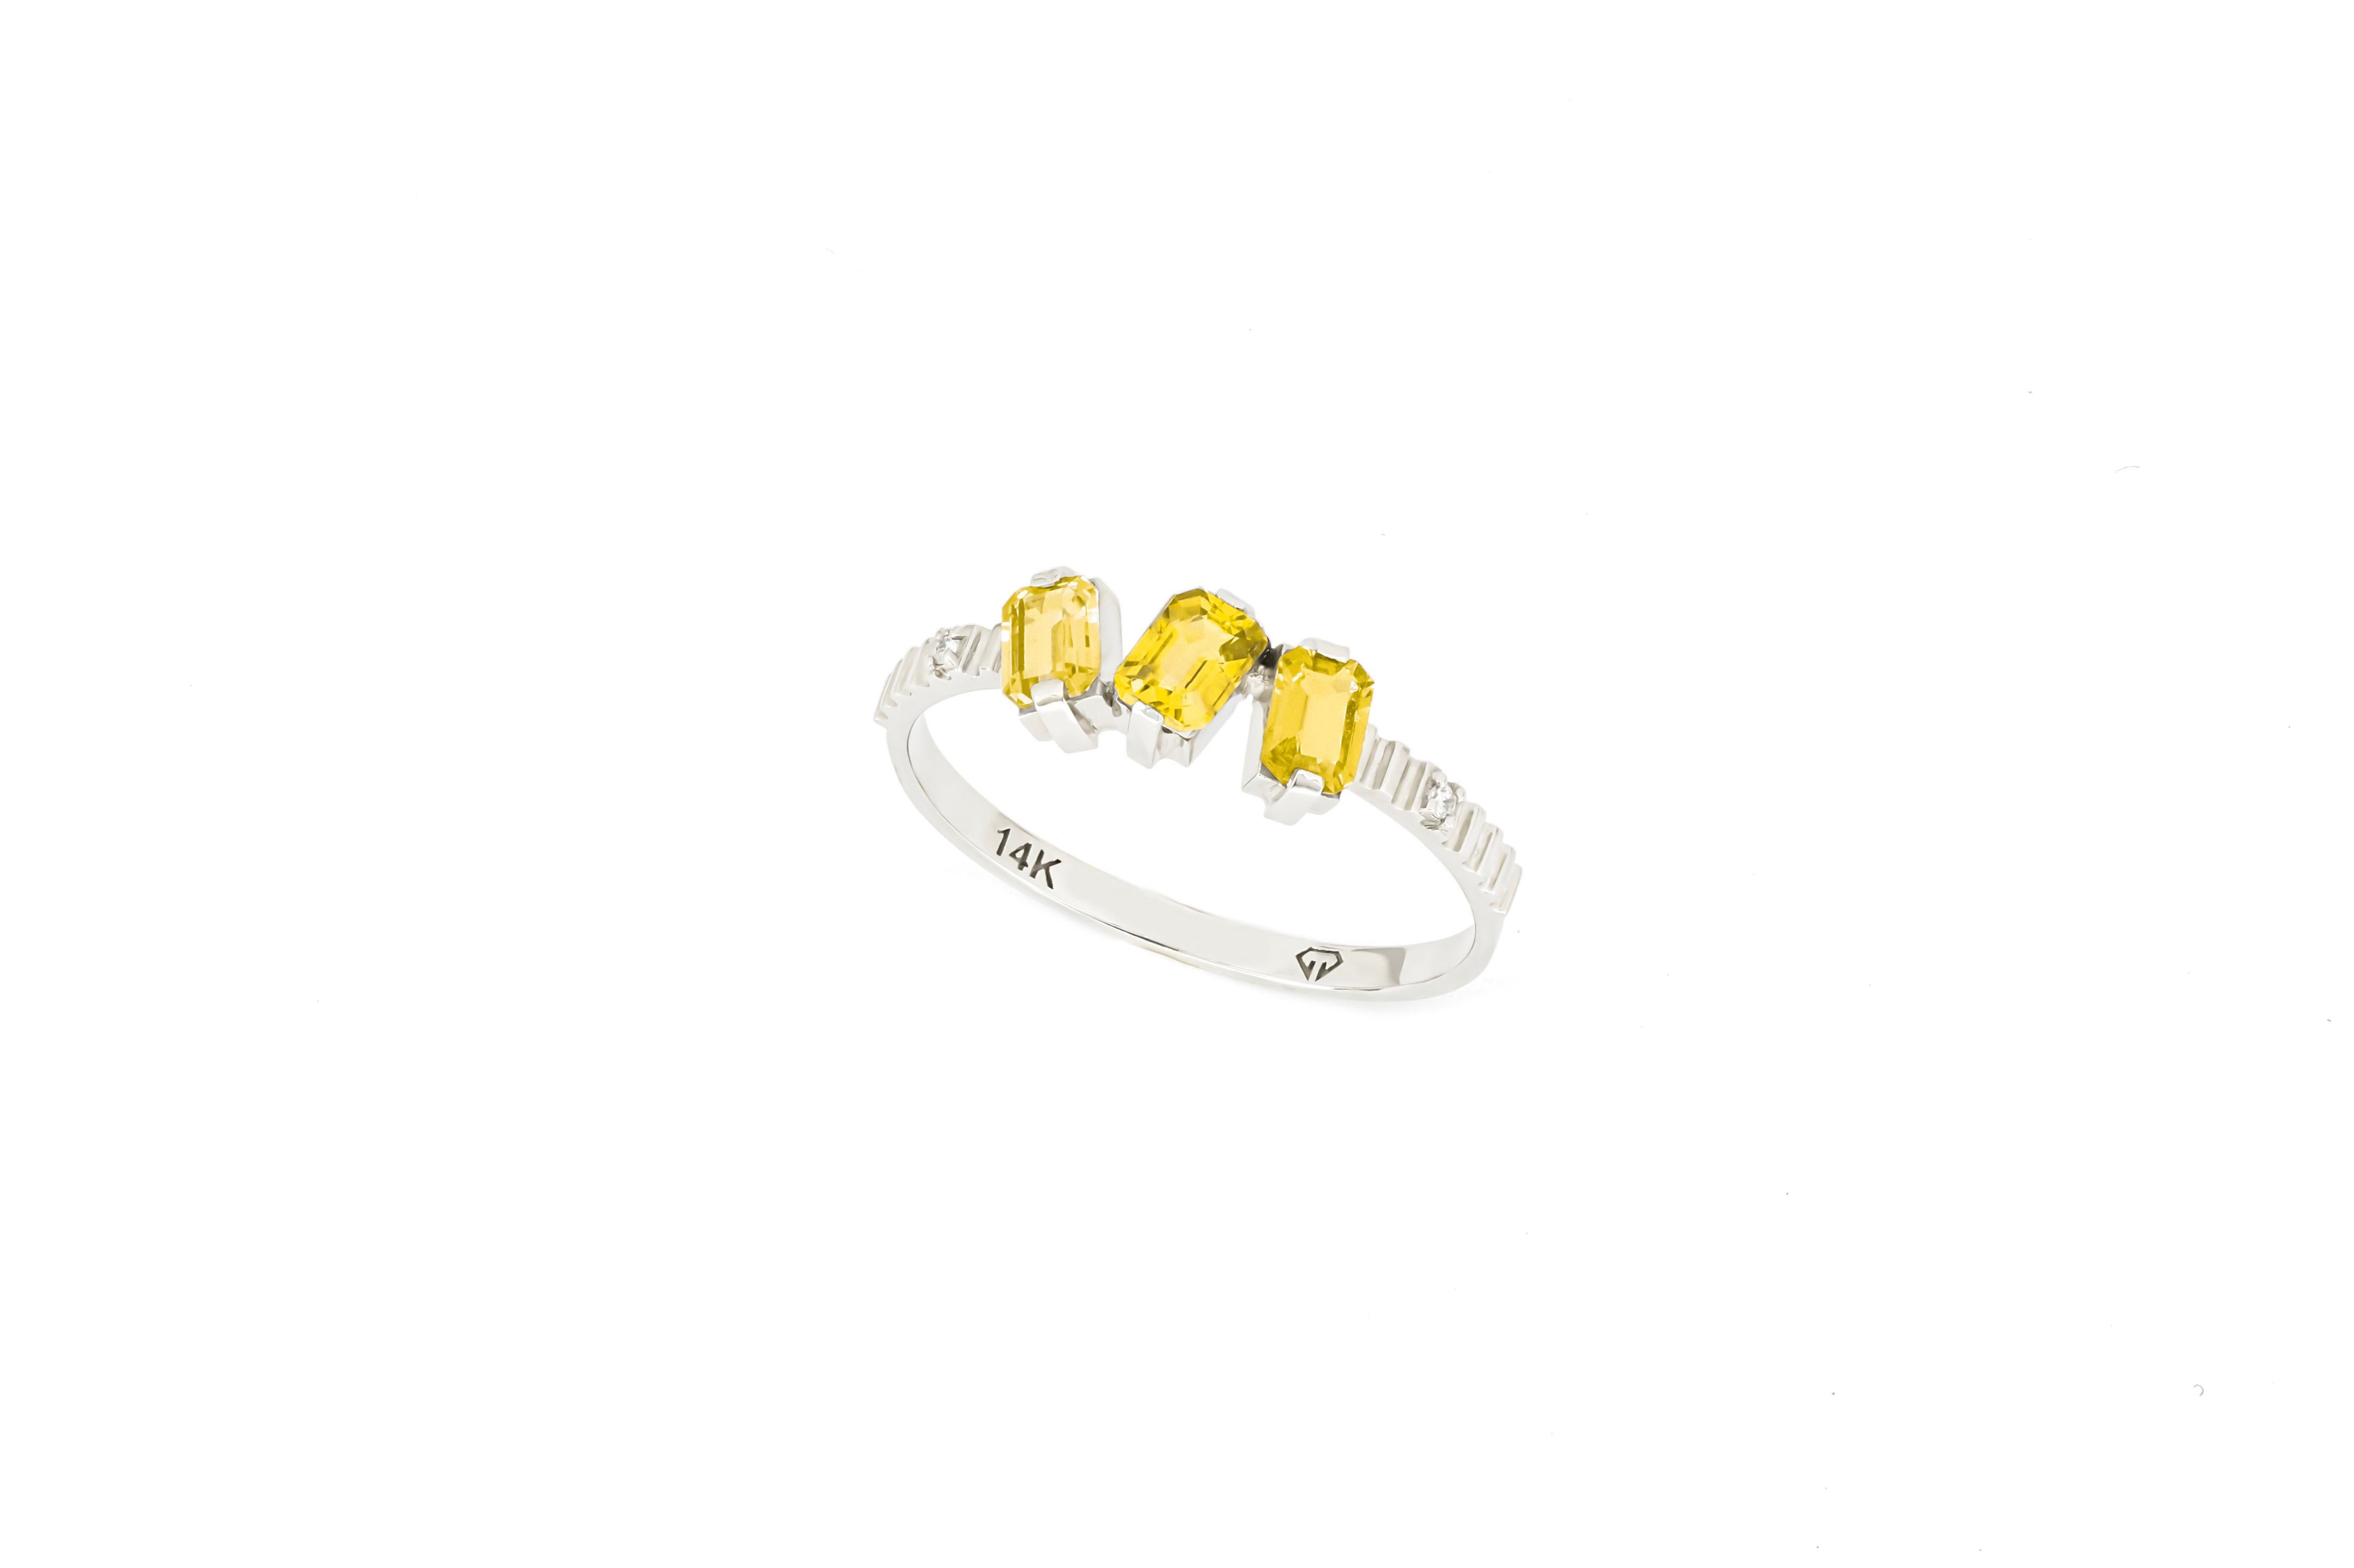 For Sale:  Monochrome yellow gemstone 14k ring. 7